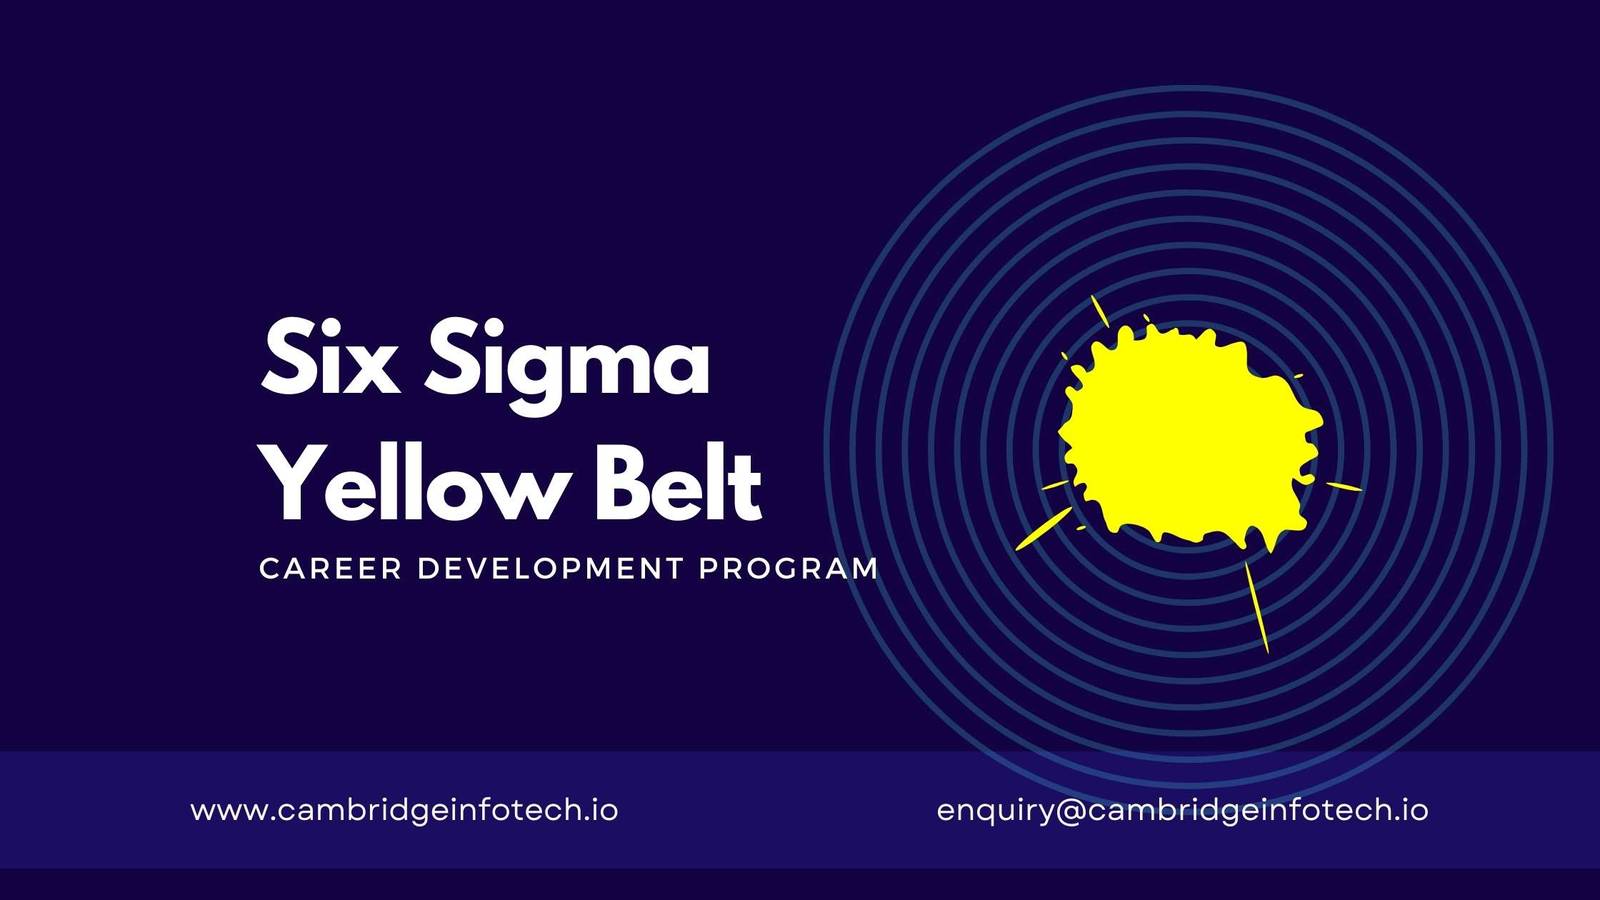 Six Sigma Yellow Belt course in Bangalore